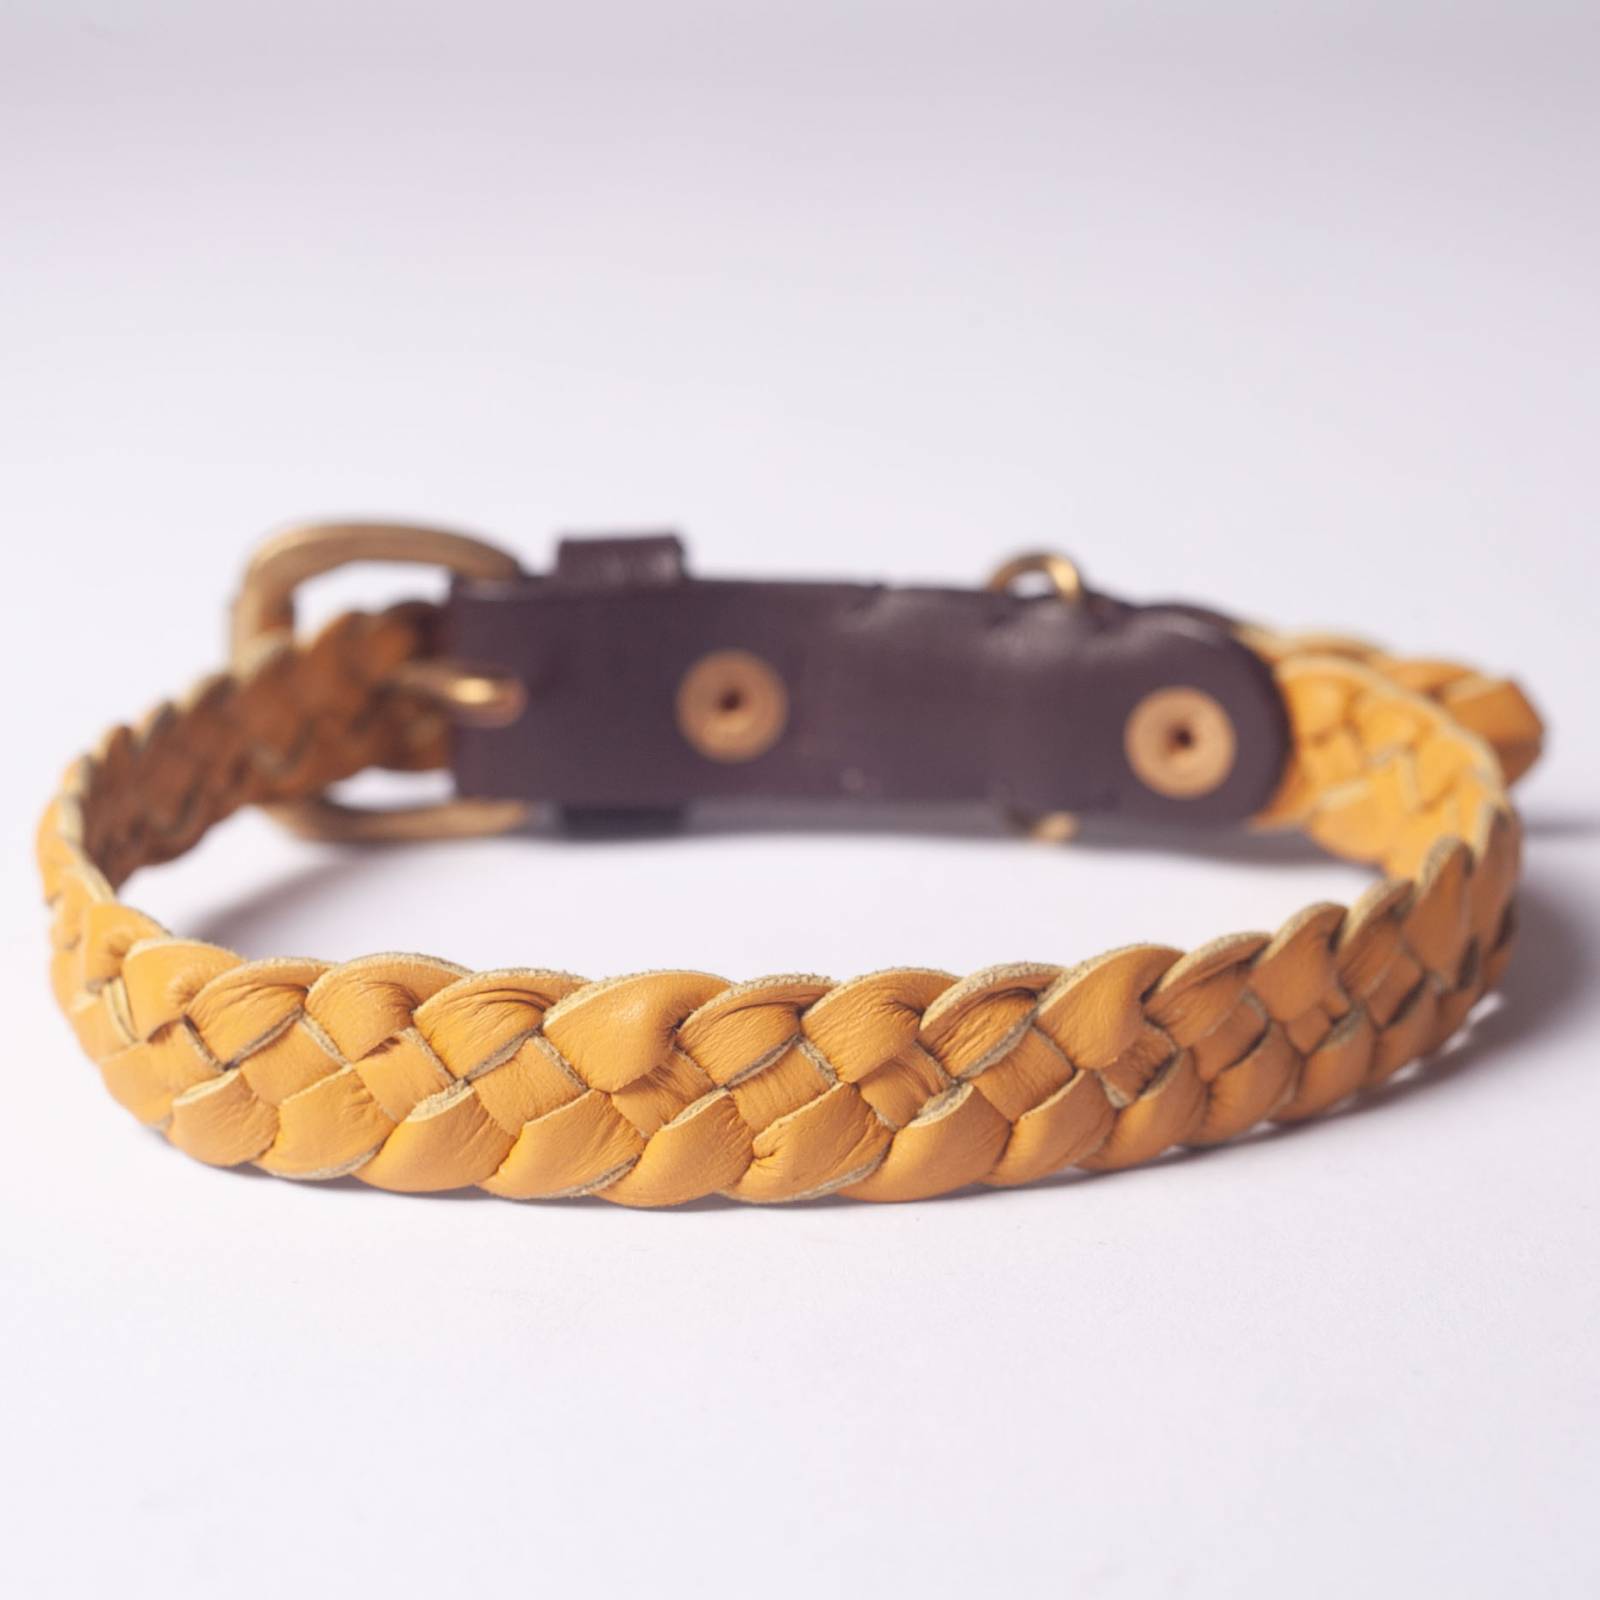 Windsor Leather Dog Collar In Wheat - Medium thumbnails